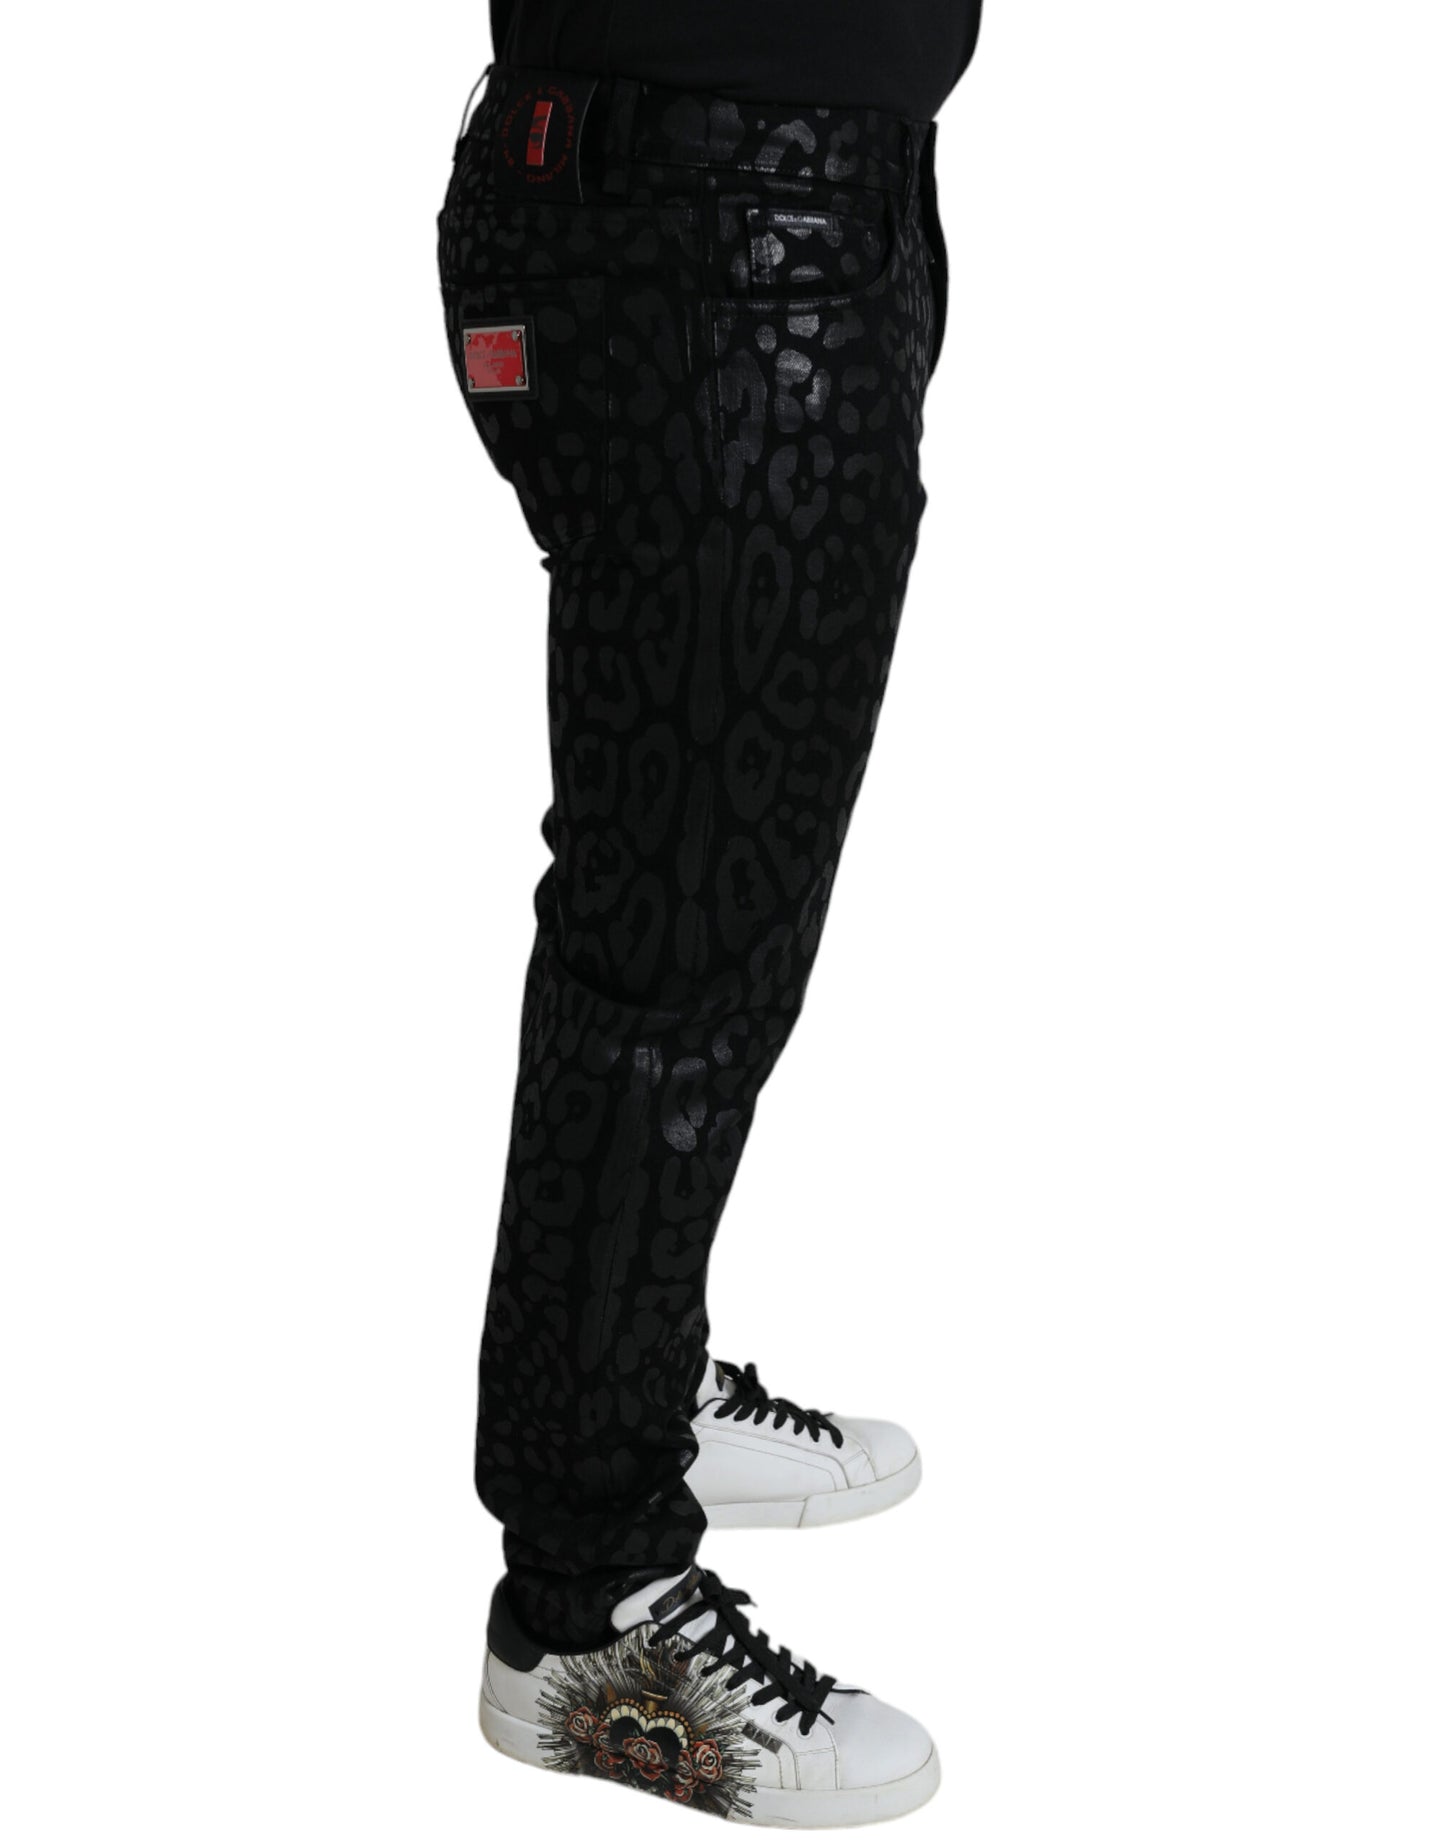 Exquisite Slim-fit Patterned Black Jeans